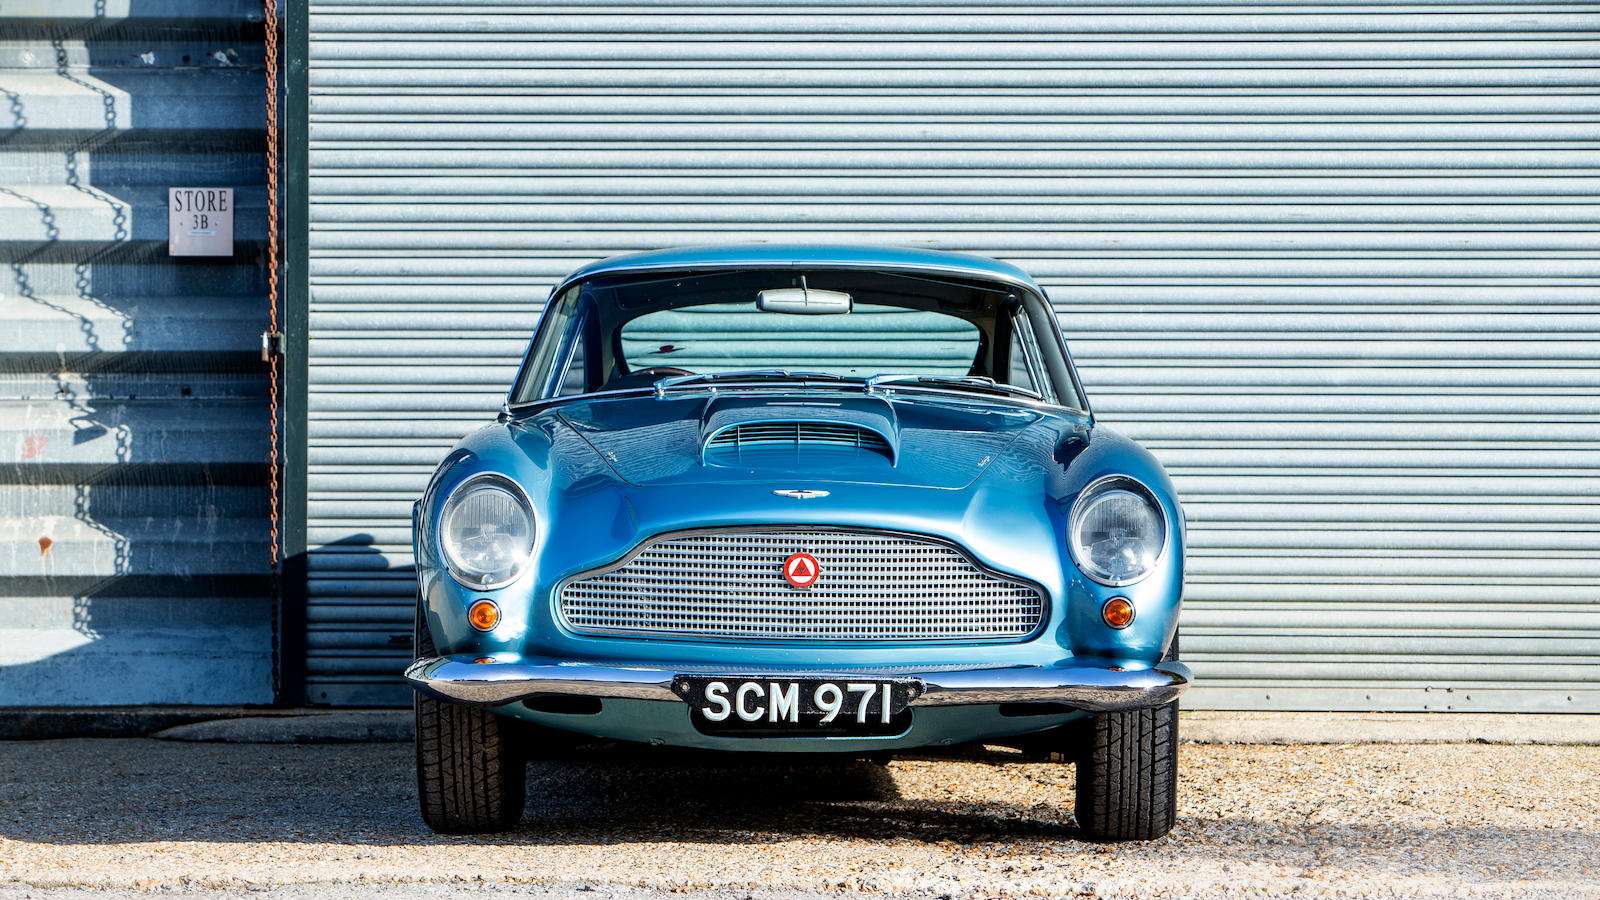 ‘Missing’ Aston Martin leads Bonhams’ Bond Street sale